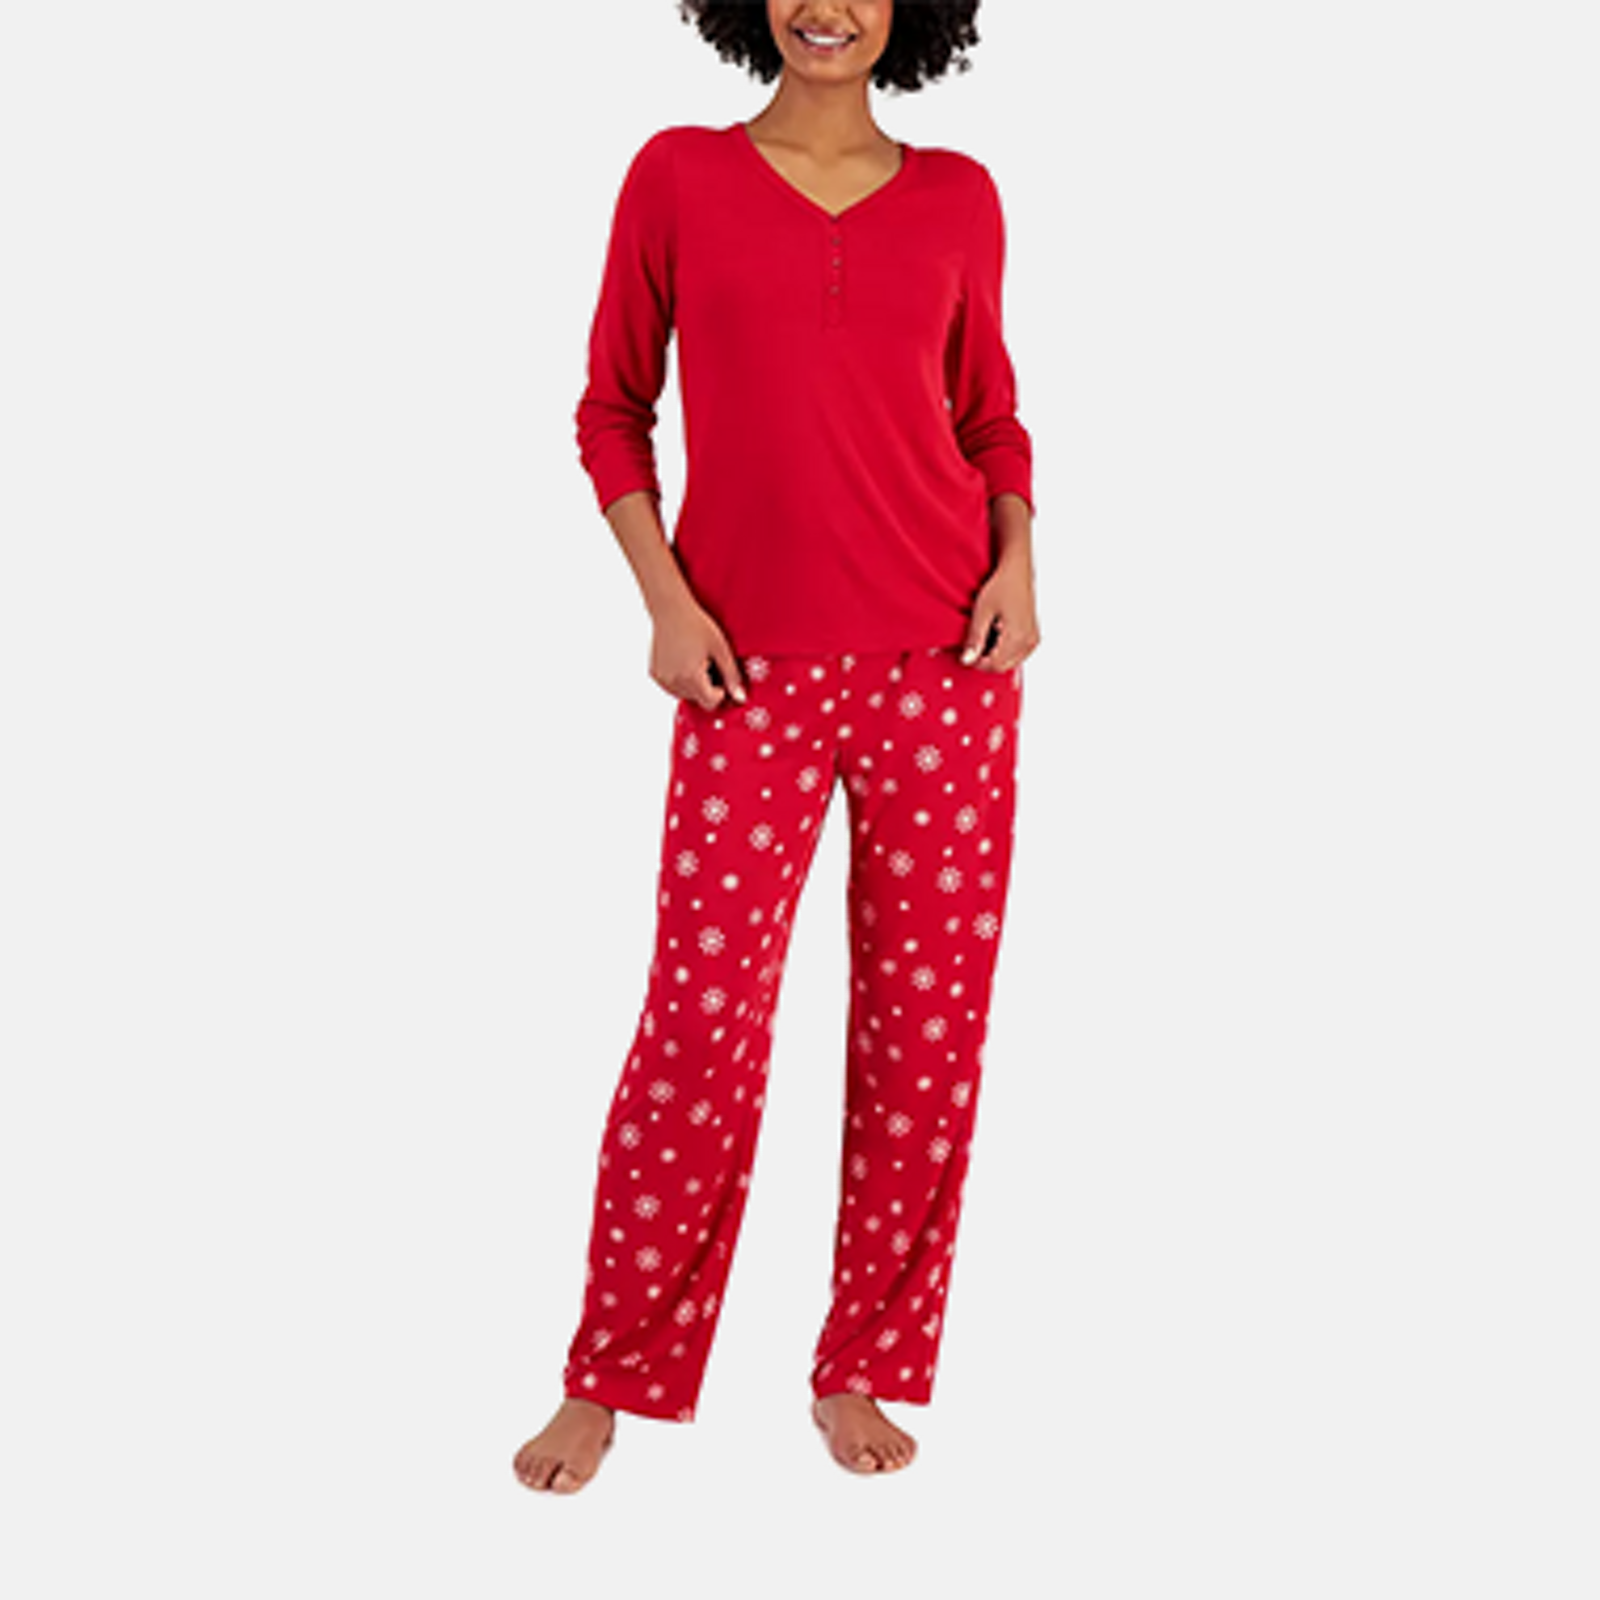 Women's Pajamas, Robes & Lingerie